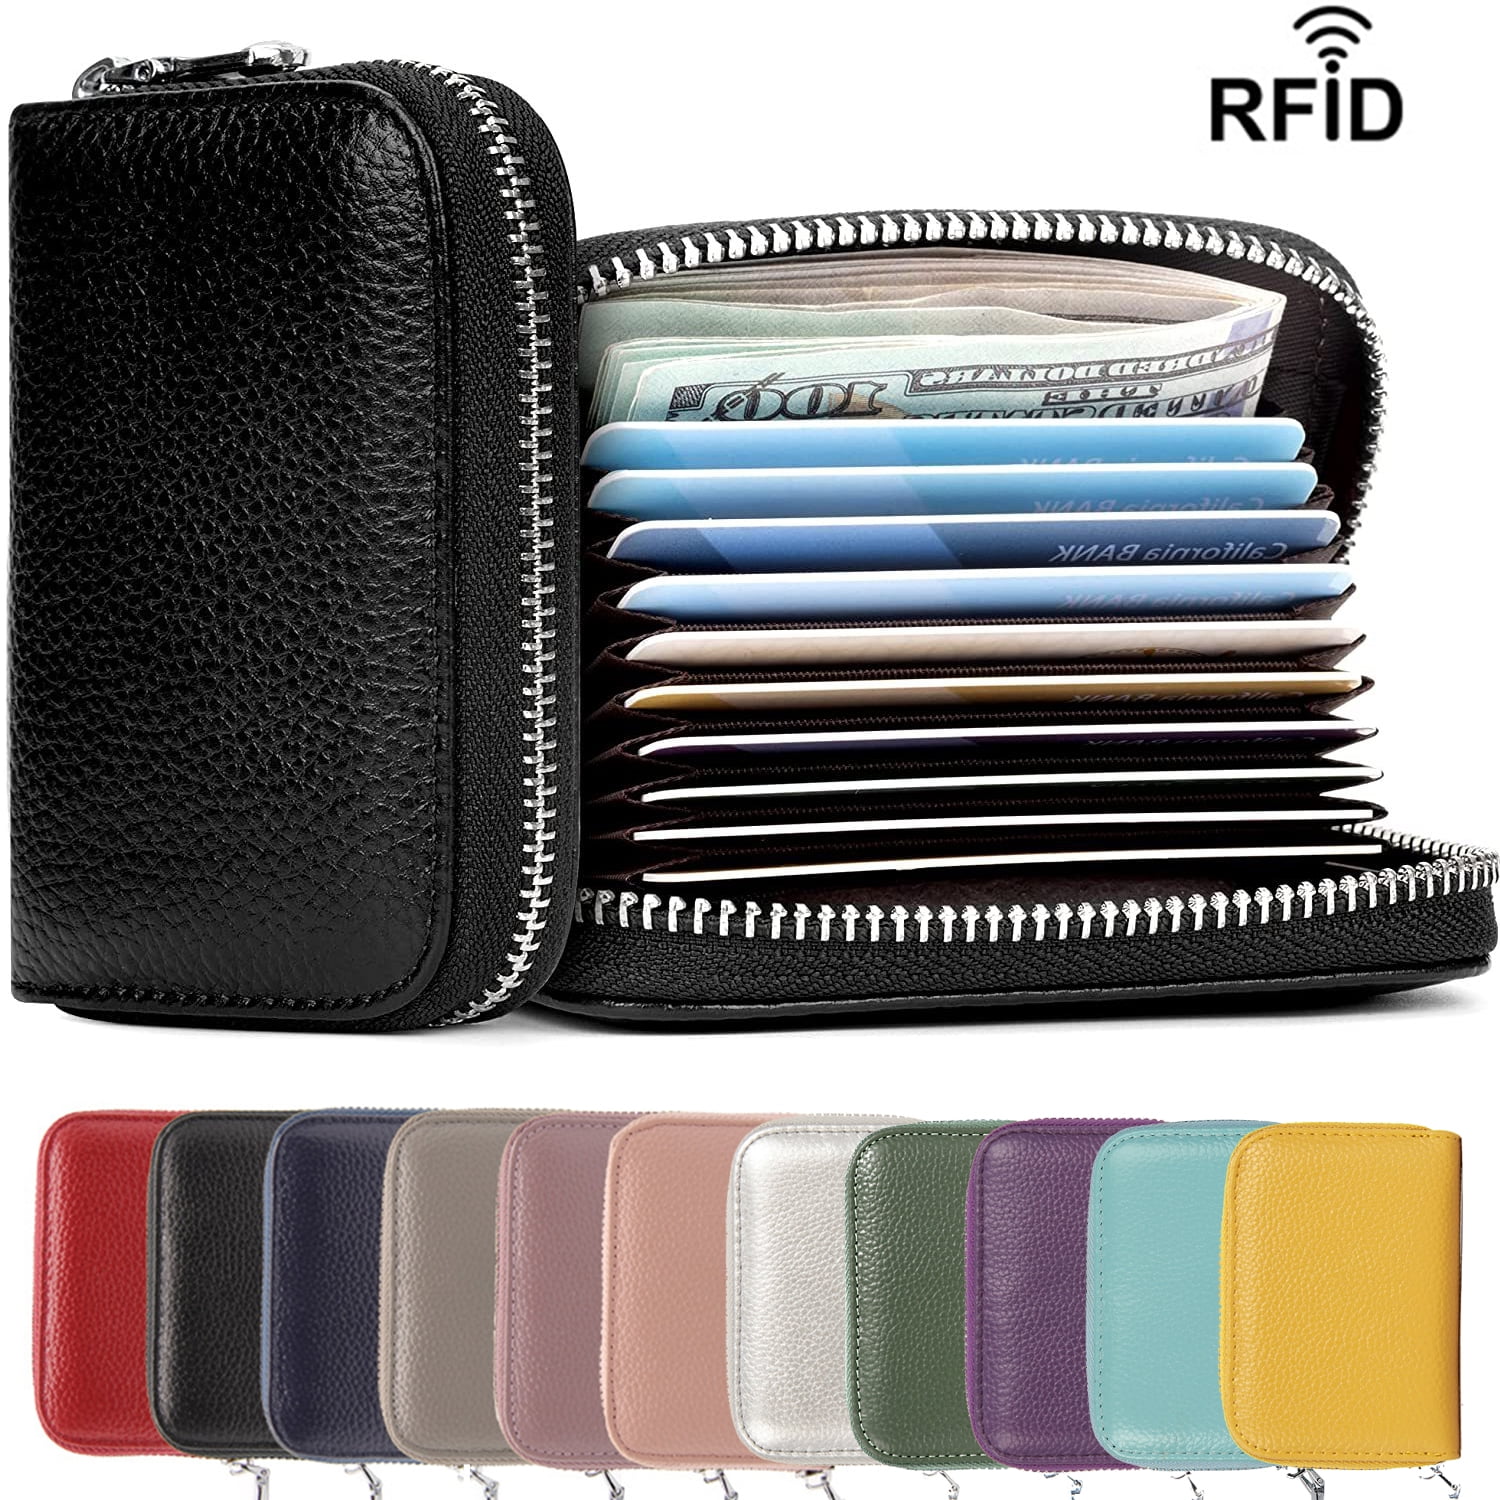 Genuine Leather Credit Card Holder Wallet RFID Blocking Secure Card ...